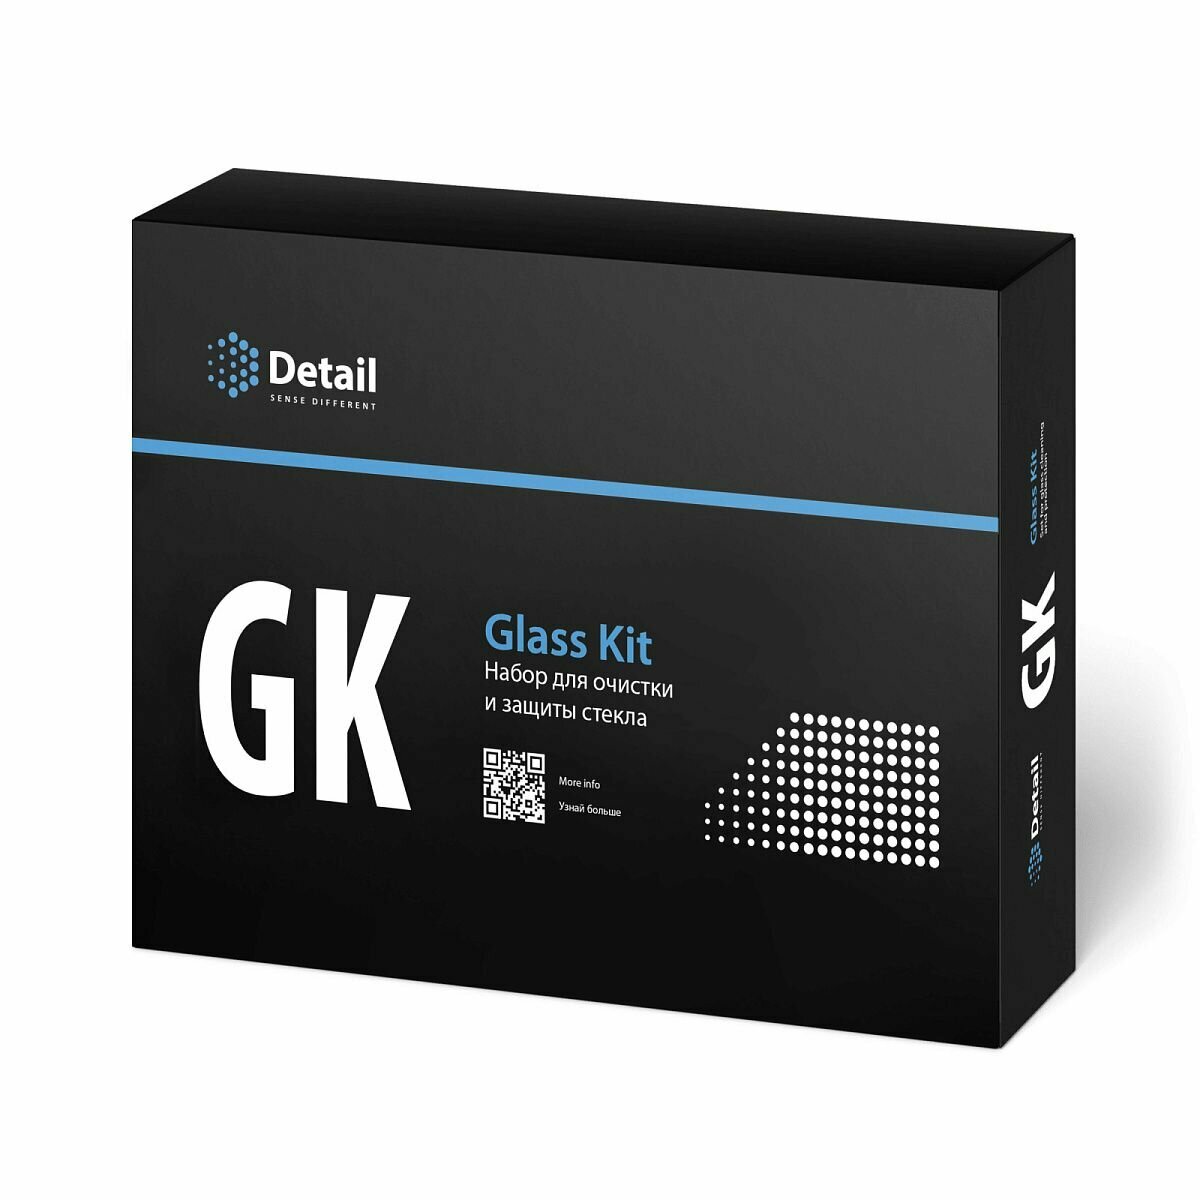 DETAIL GLASS KIT (GK) набор для очистки и защиты стекла